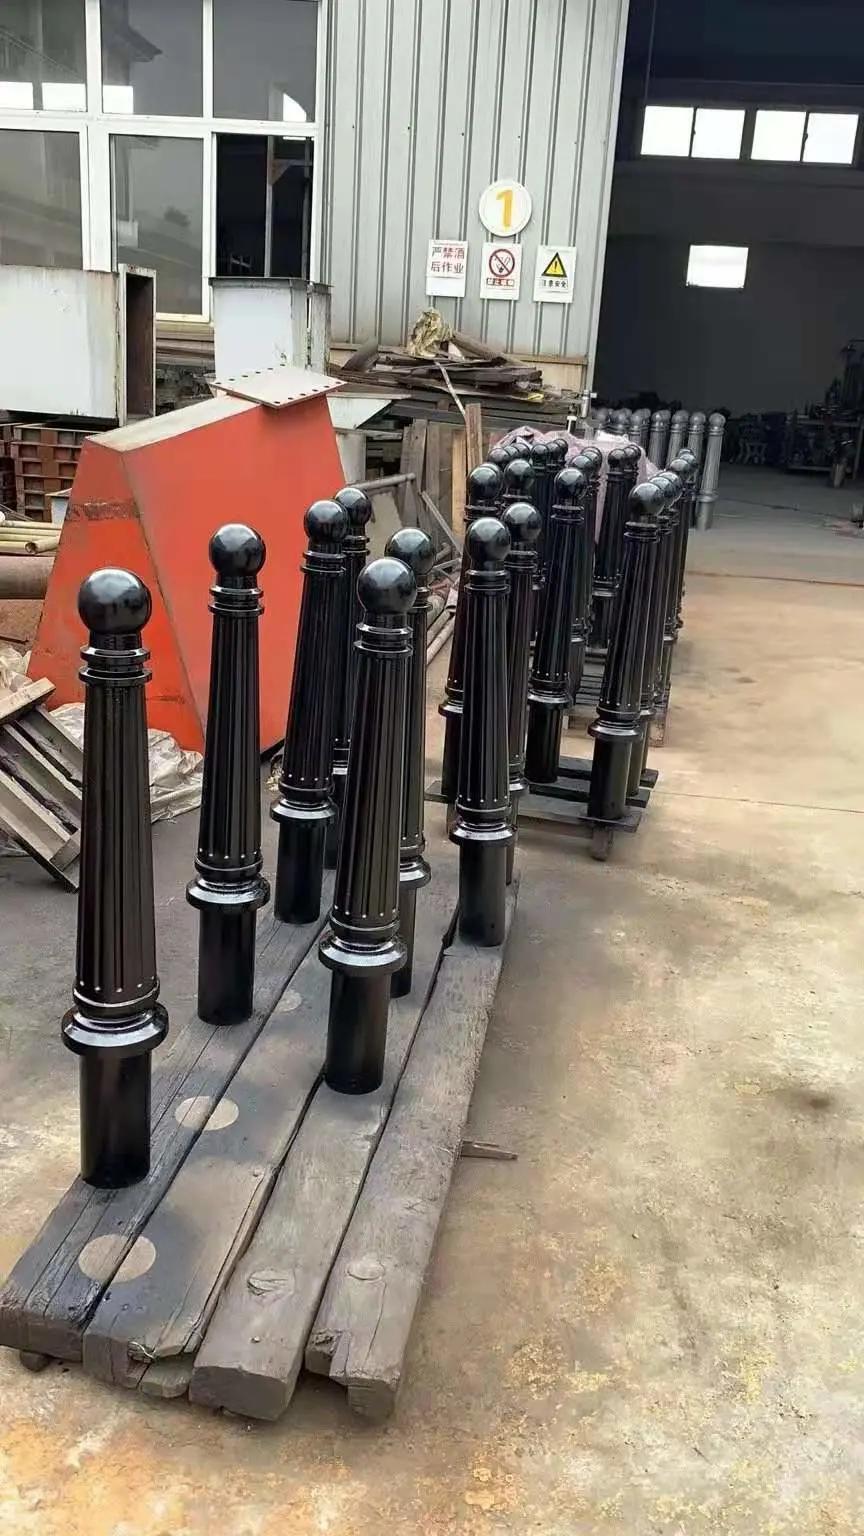 Factory Cast Iron Steel Parking Lot Chain Barrier Road Removable Powder Coated Pillar Bollard